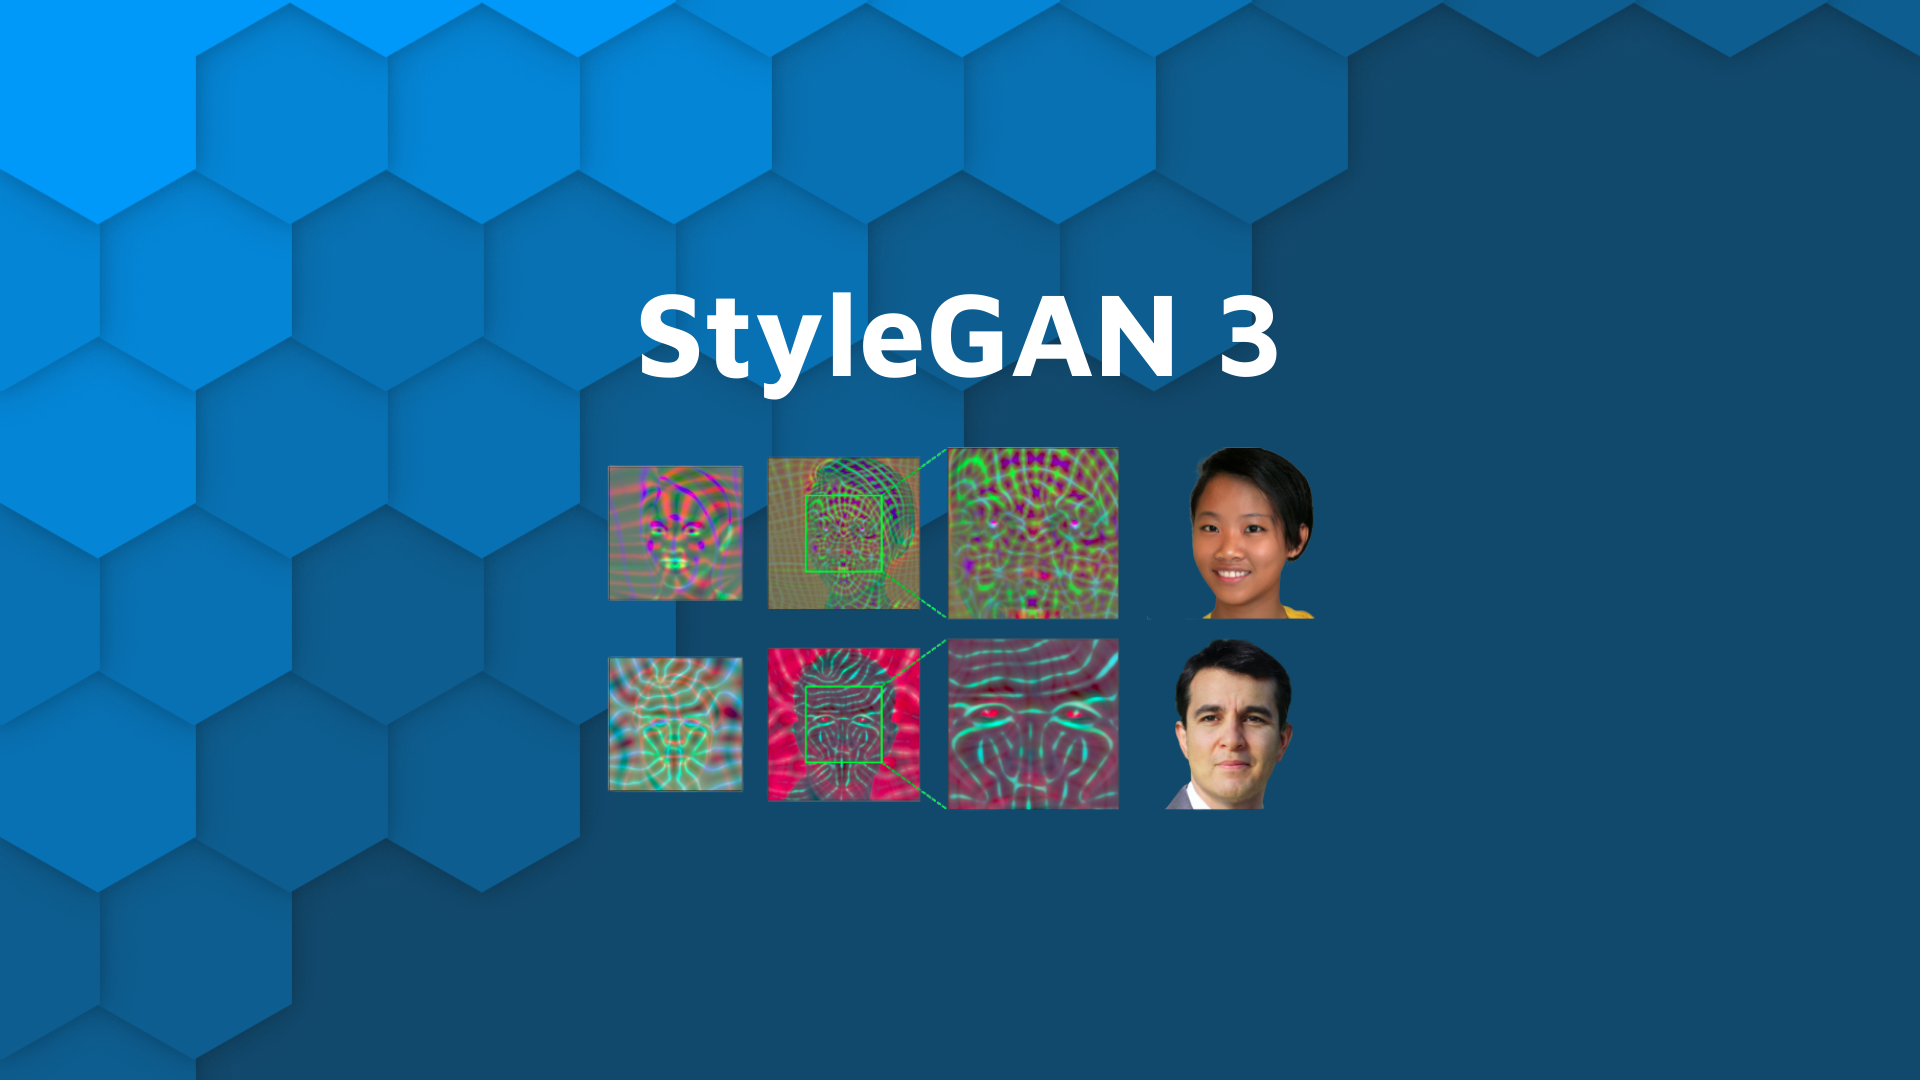 StyleGAN 3 - Computer Vision and Image Manipulation